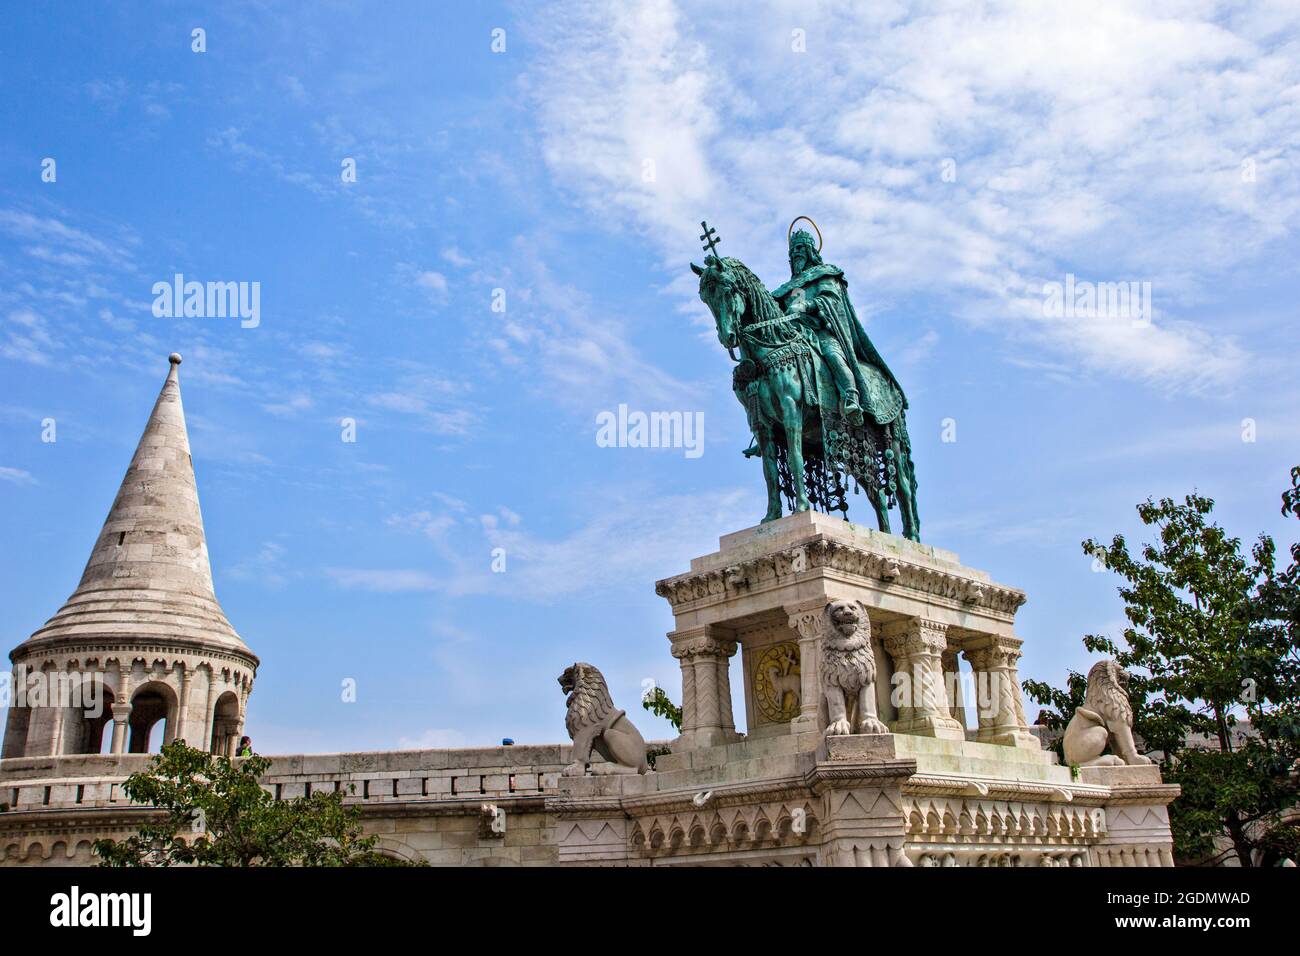 Statue of St Stephen (sv Istvan) by the Fishermen's Bastion by Halaszbastya on Castle Hill. Hungary, Budapest, Stock Photo